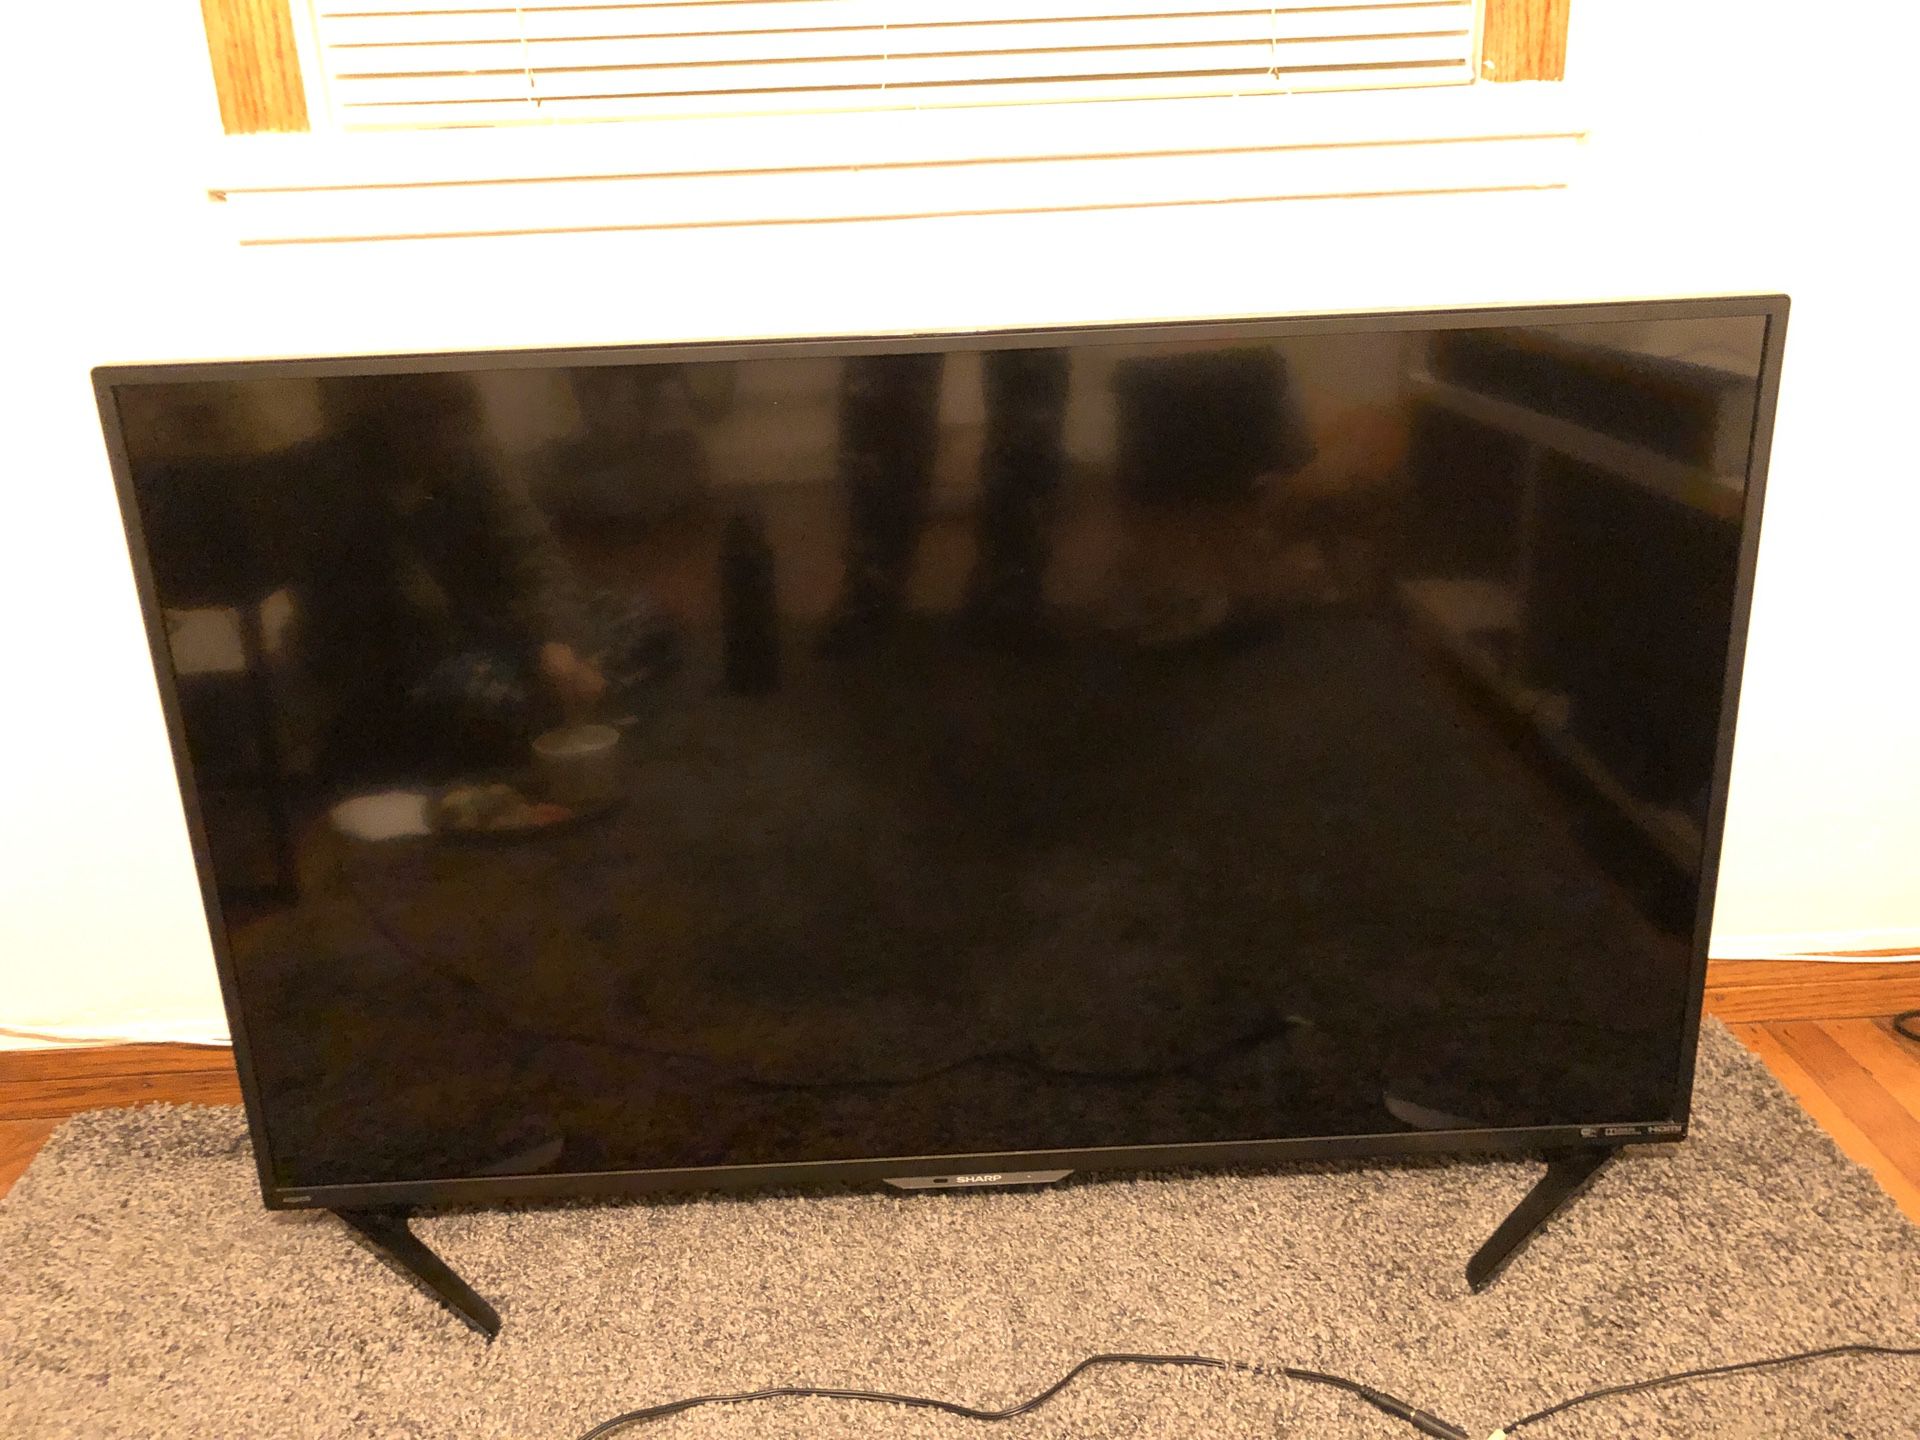 Sharp 55 inch LED TV